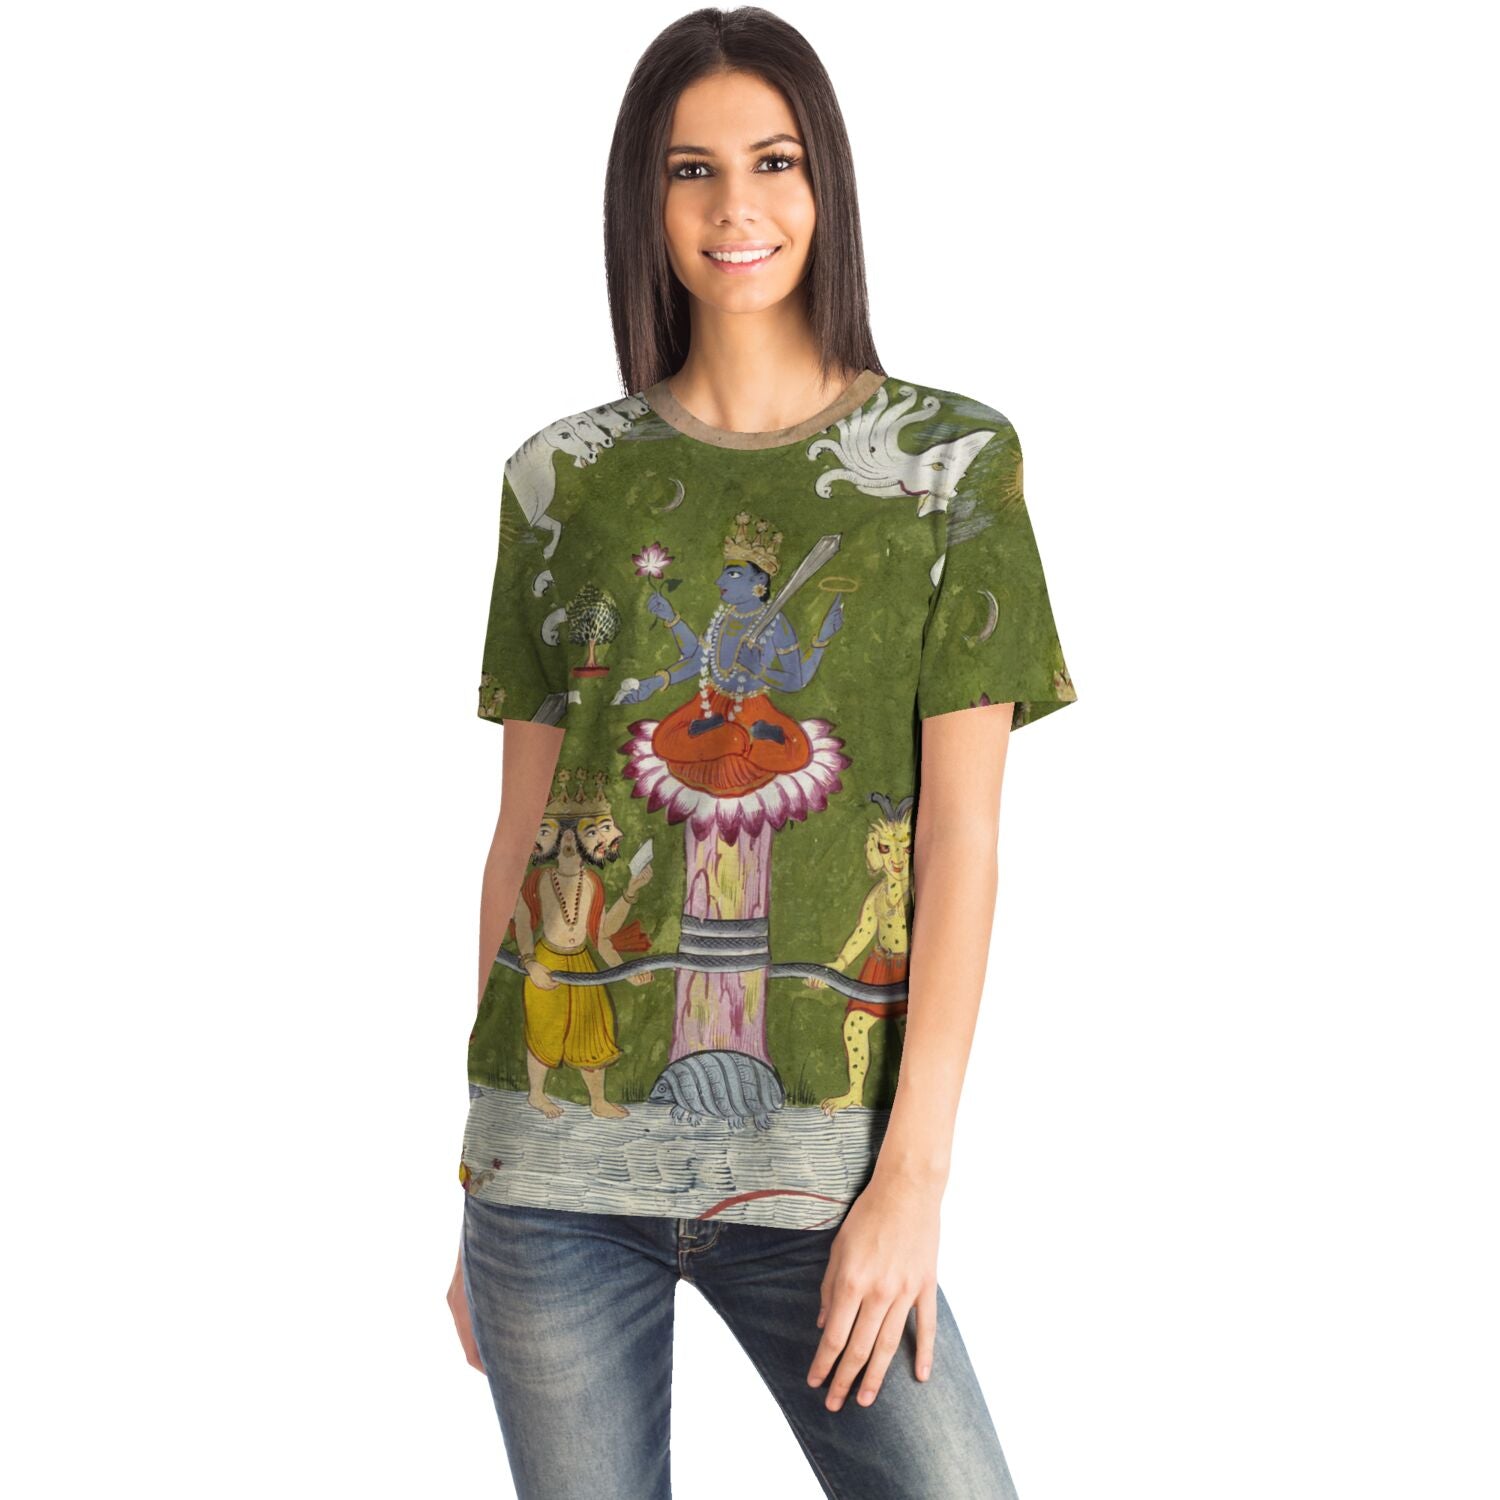 T-shirt Vishnu Consumes the Poison Halahala as His Tortoise Avatar Kurma and Saves the World | Sacred Vintage Indian Graphic Art T-Shirt